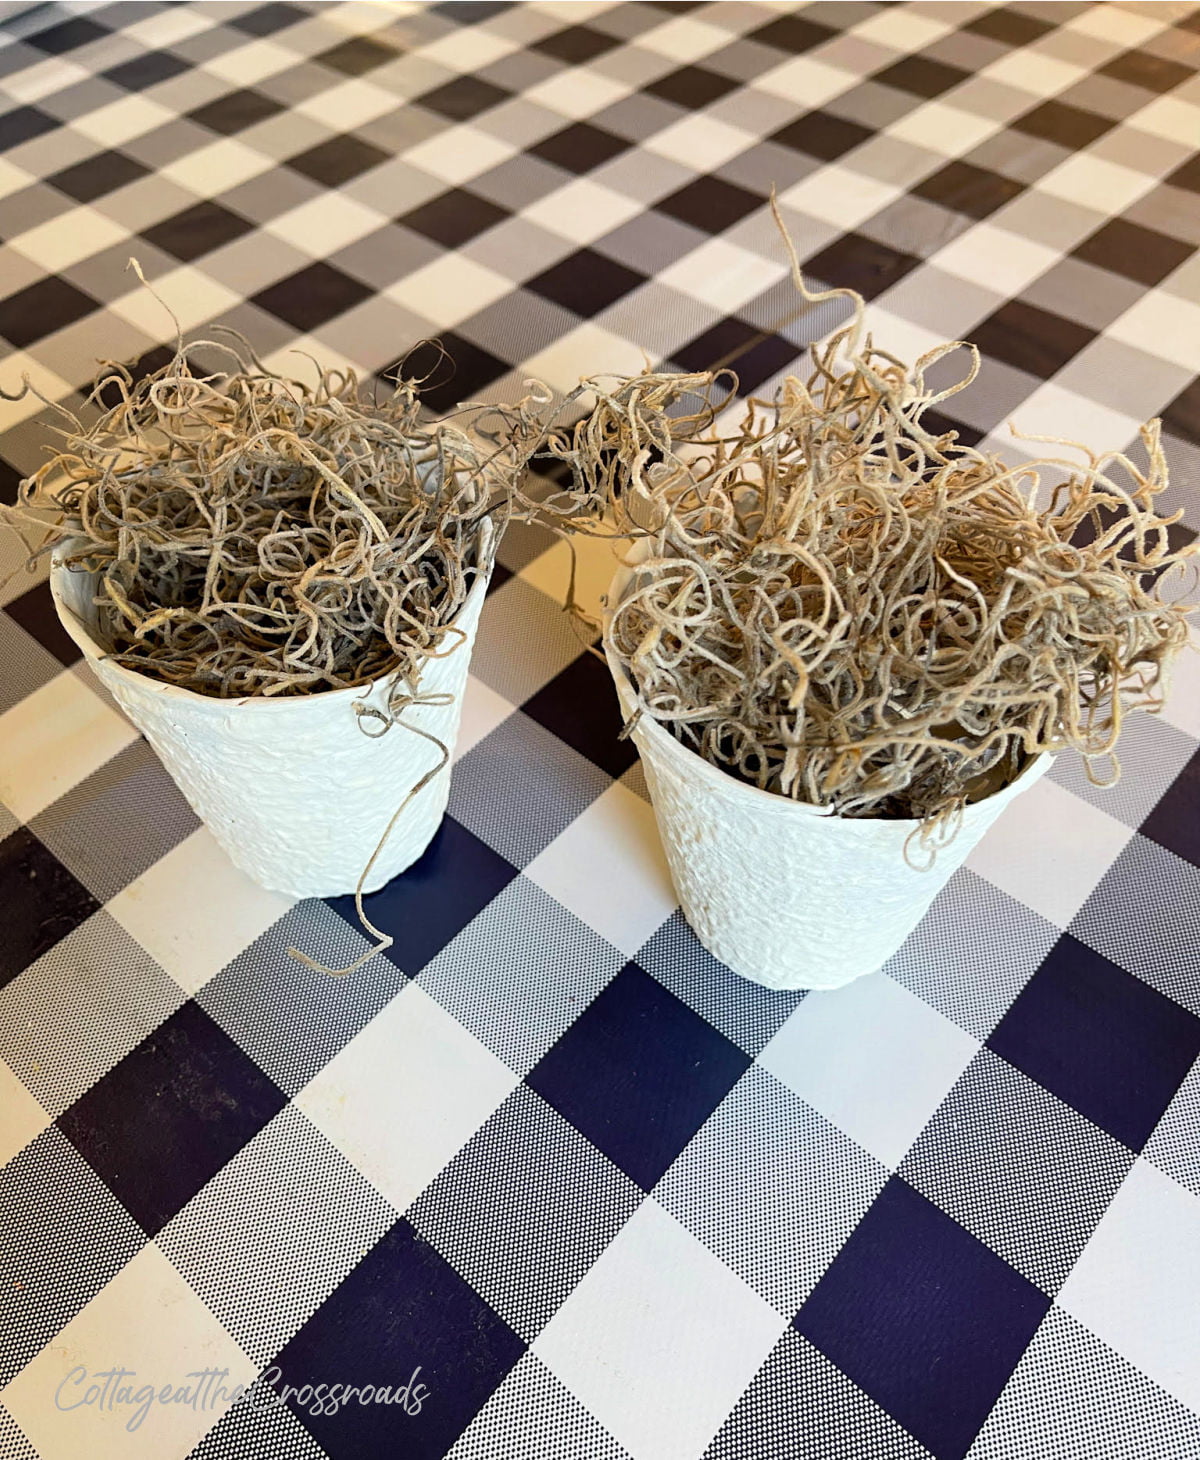 Spanish moss inside 2 peat pots